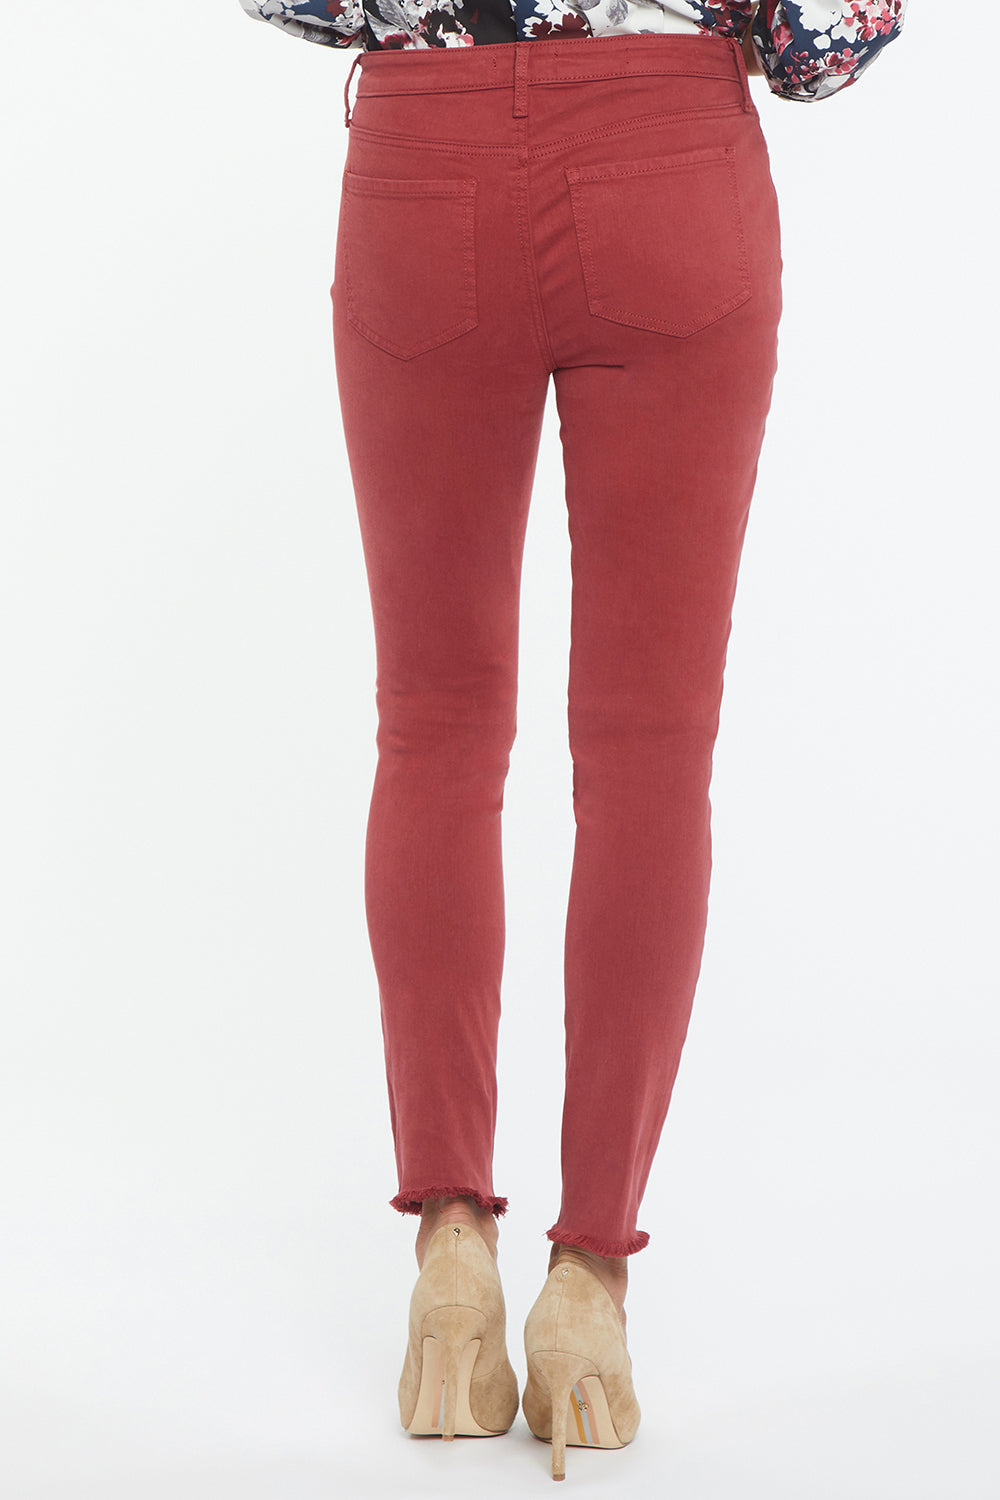 NYDJ Ami Skinny Jeans In Petite With Frayed Hems - Boysenberry